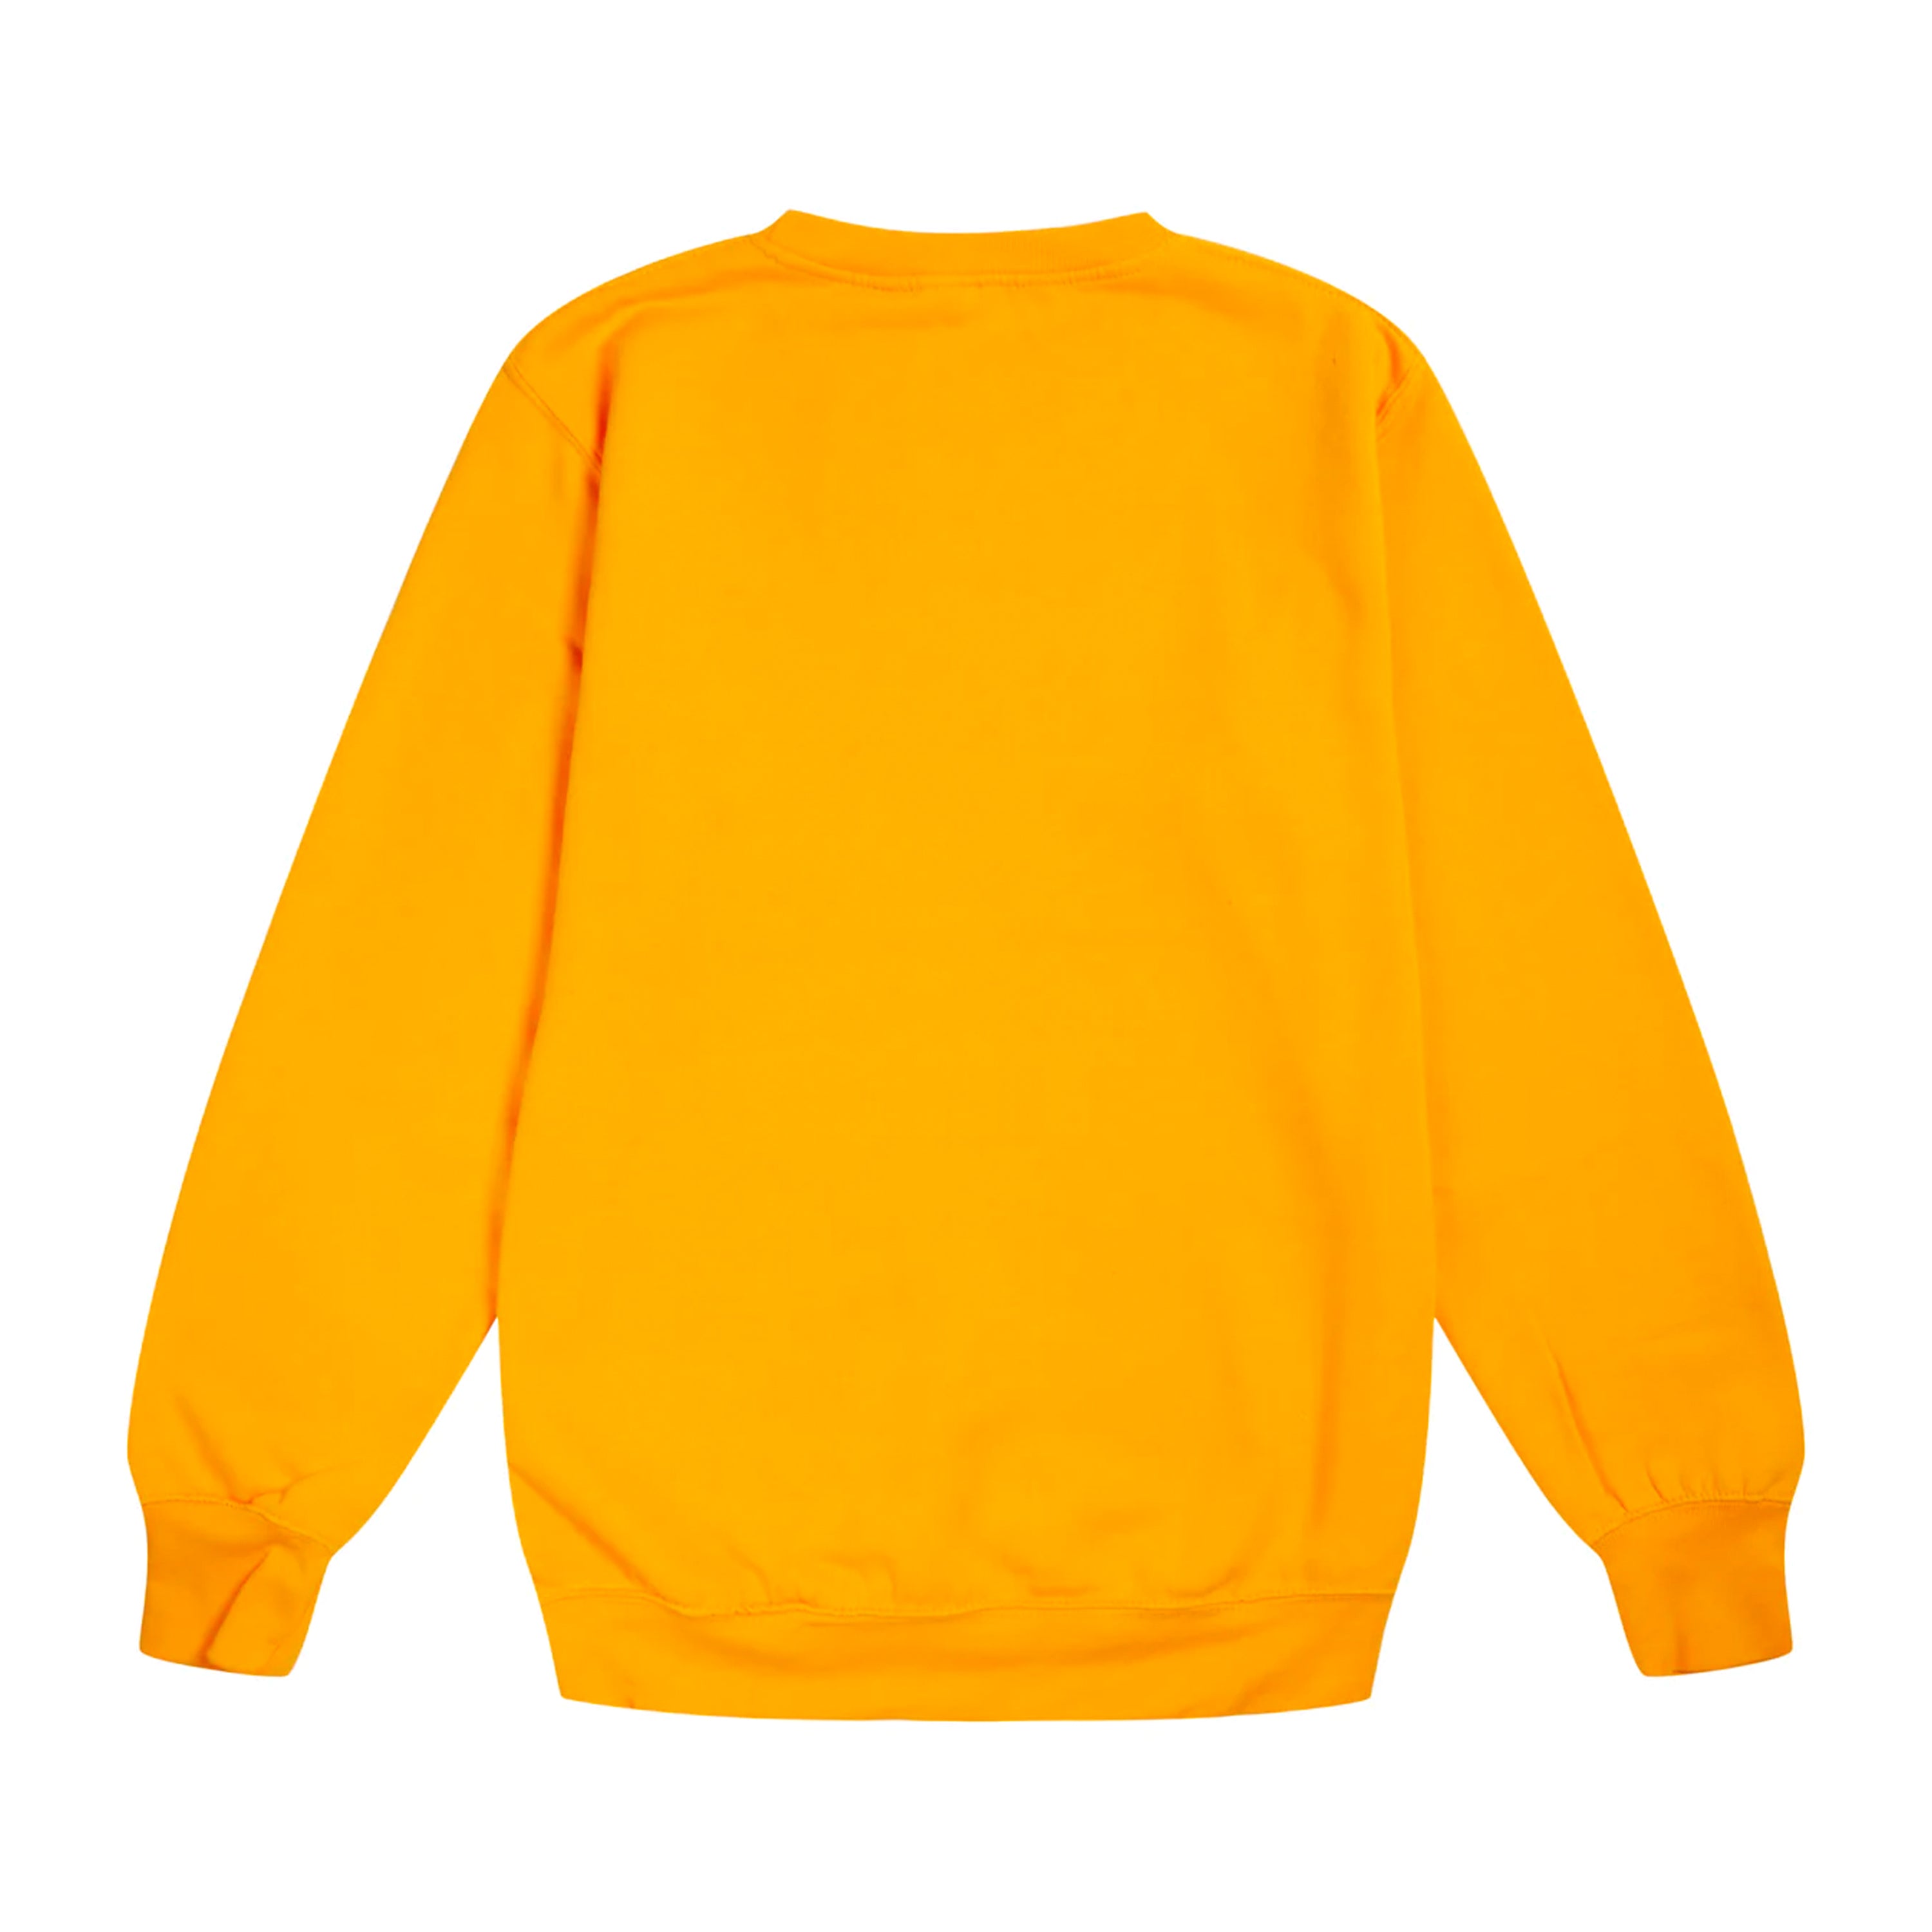 Essential Sweatshirt - Yellow